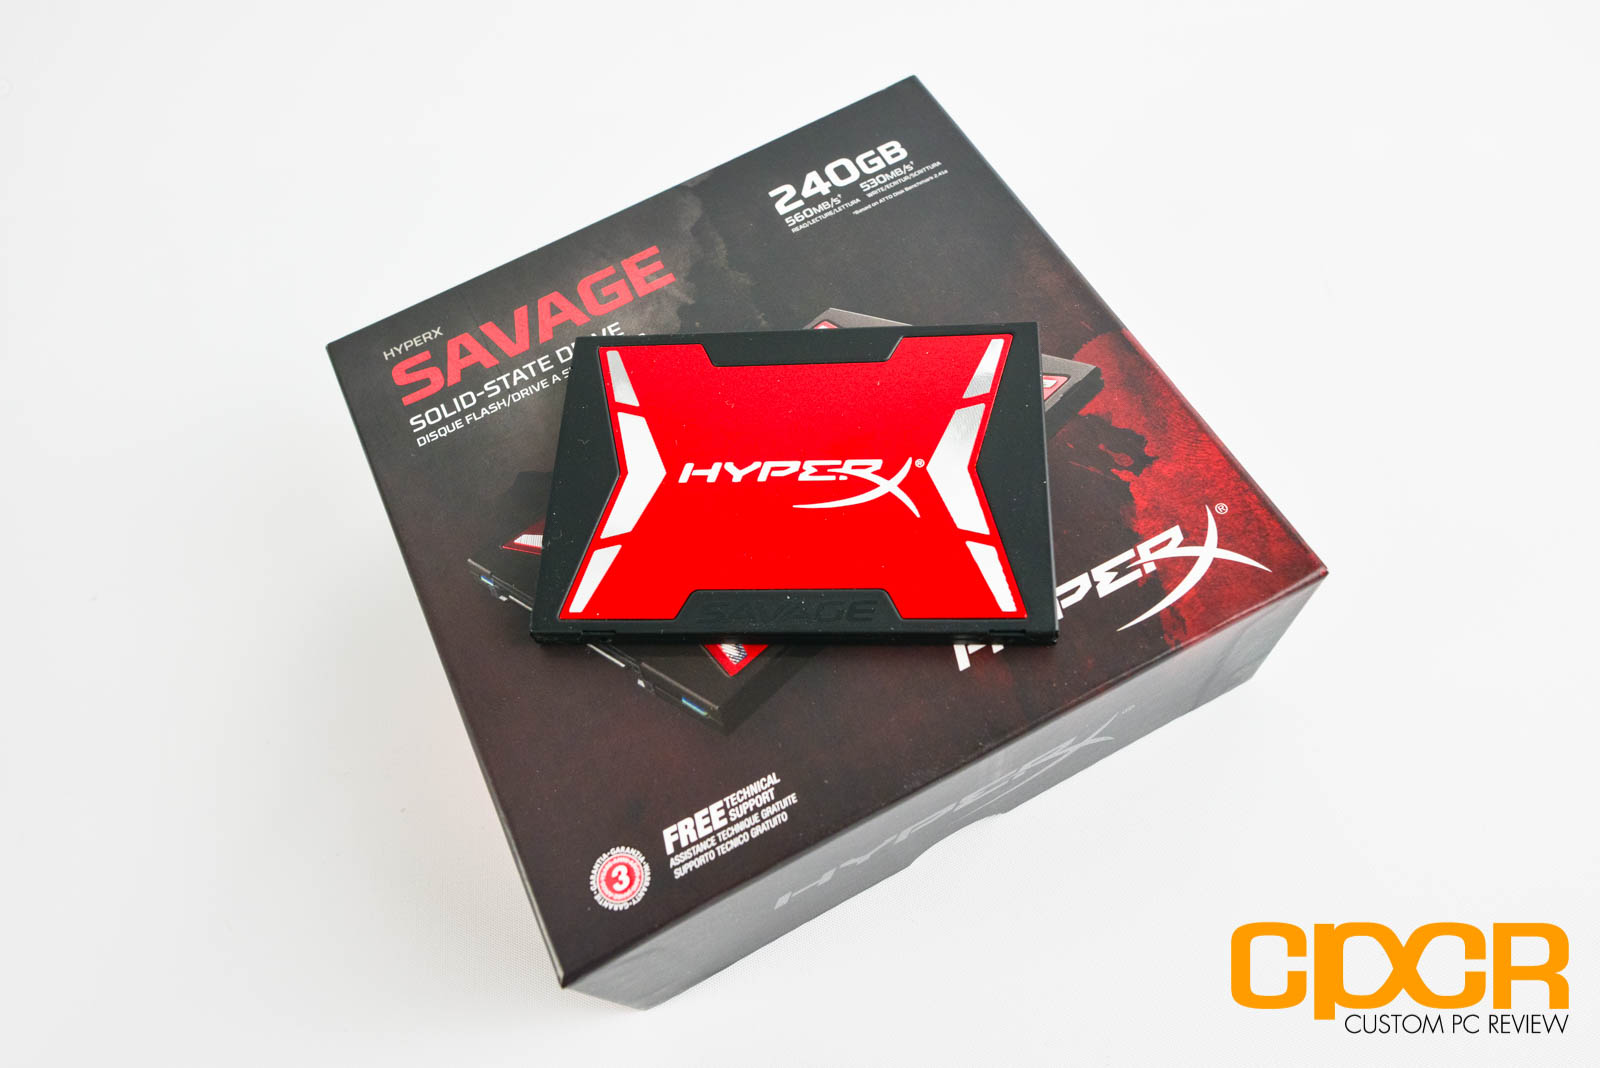 Review: Kingston HyperX Savage 240GB SSD | Custom PC Review